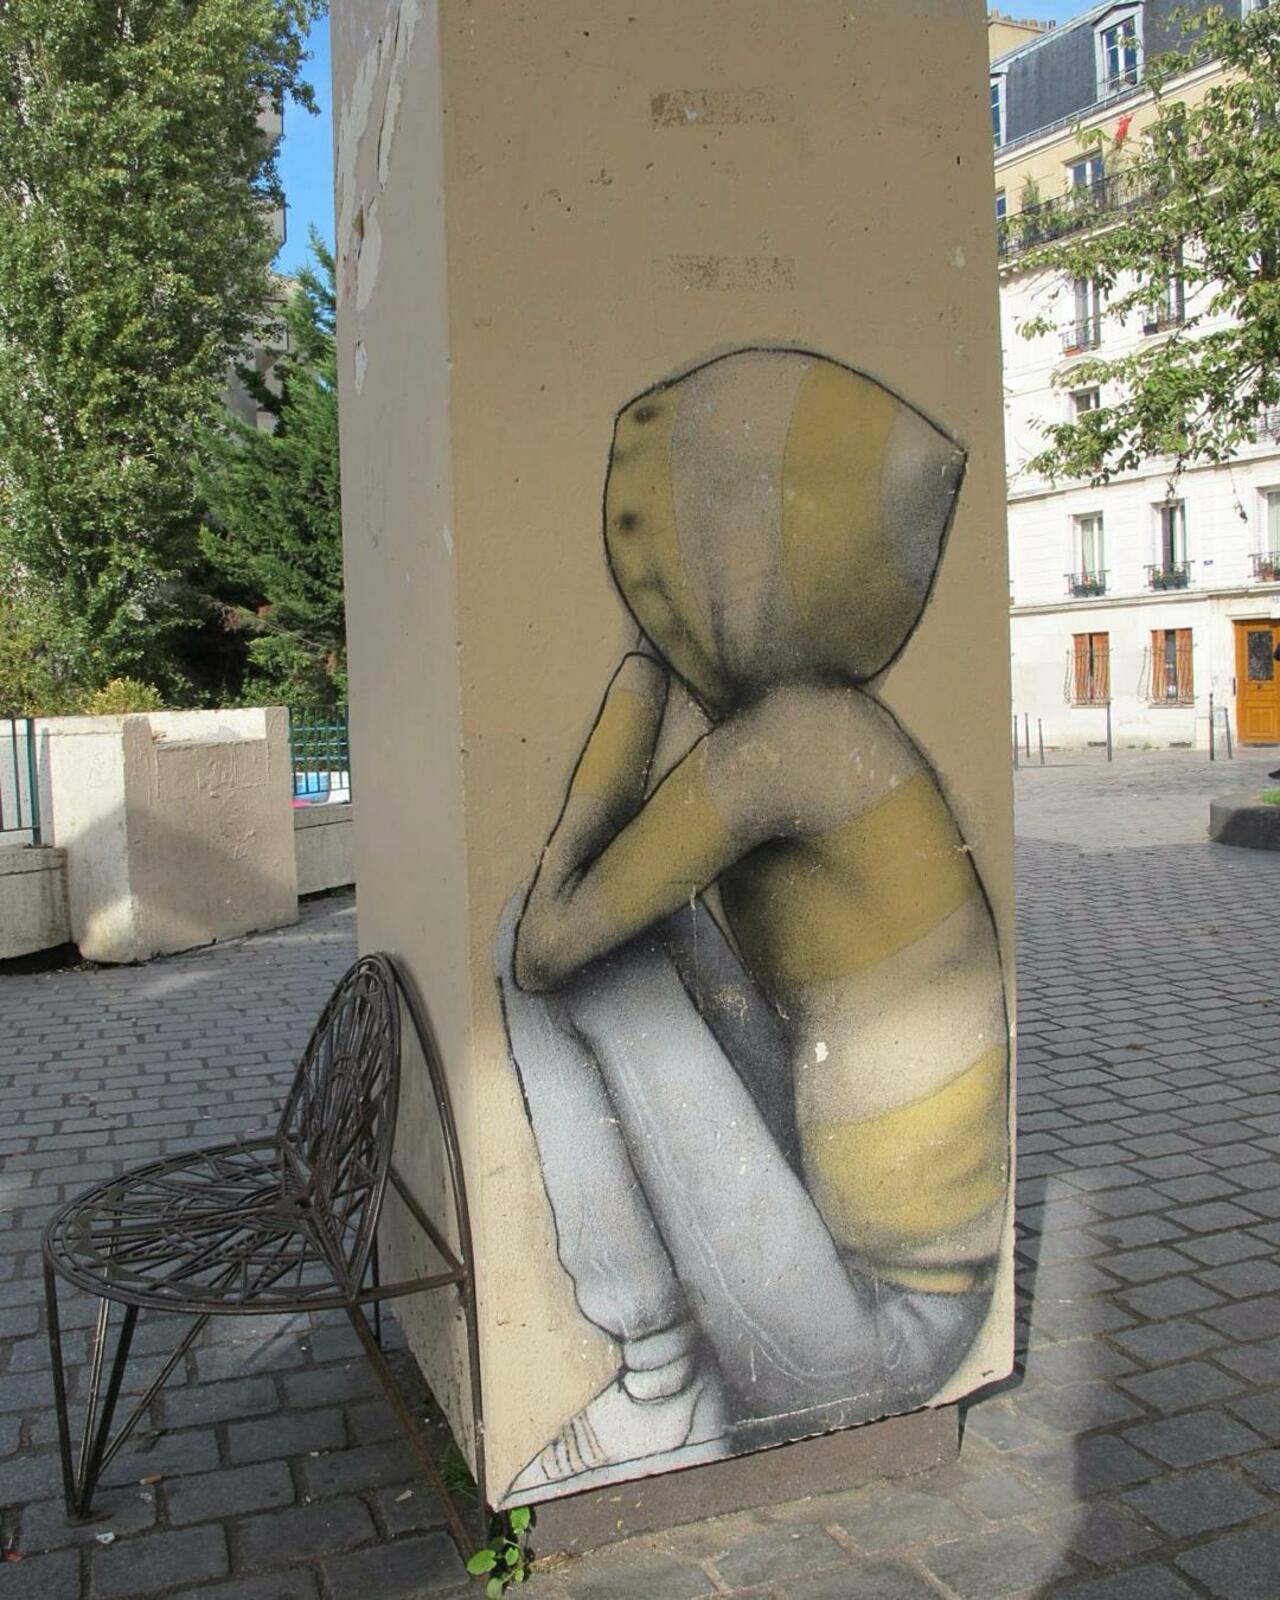 #Paris #graffiti photo by @streetrorart http://ift.tt/1NvTl91 #StreetArt https://t.co/KlW8SQiKJh